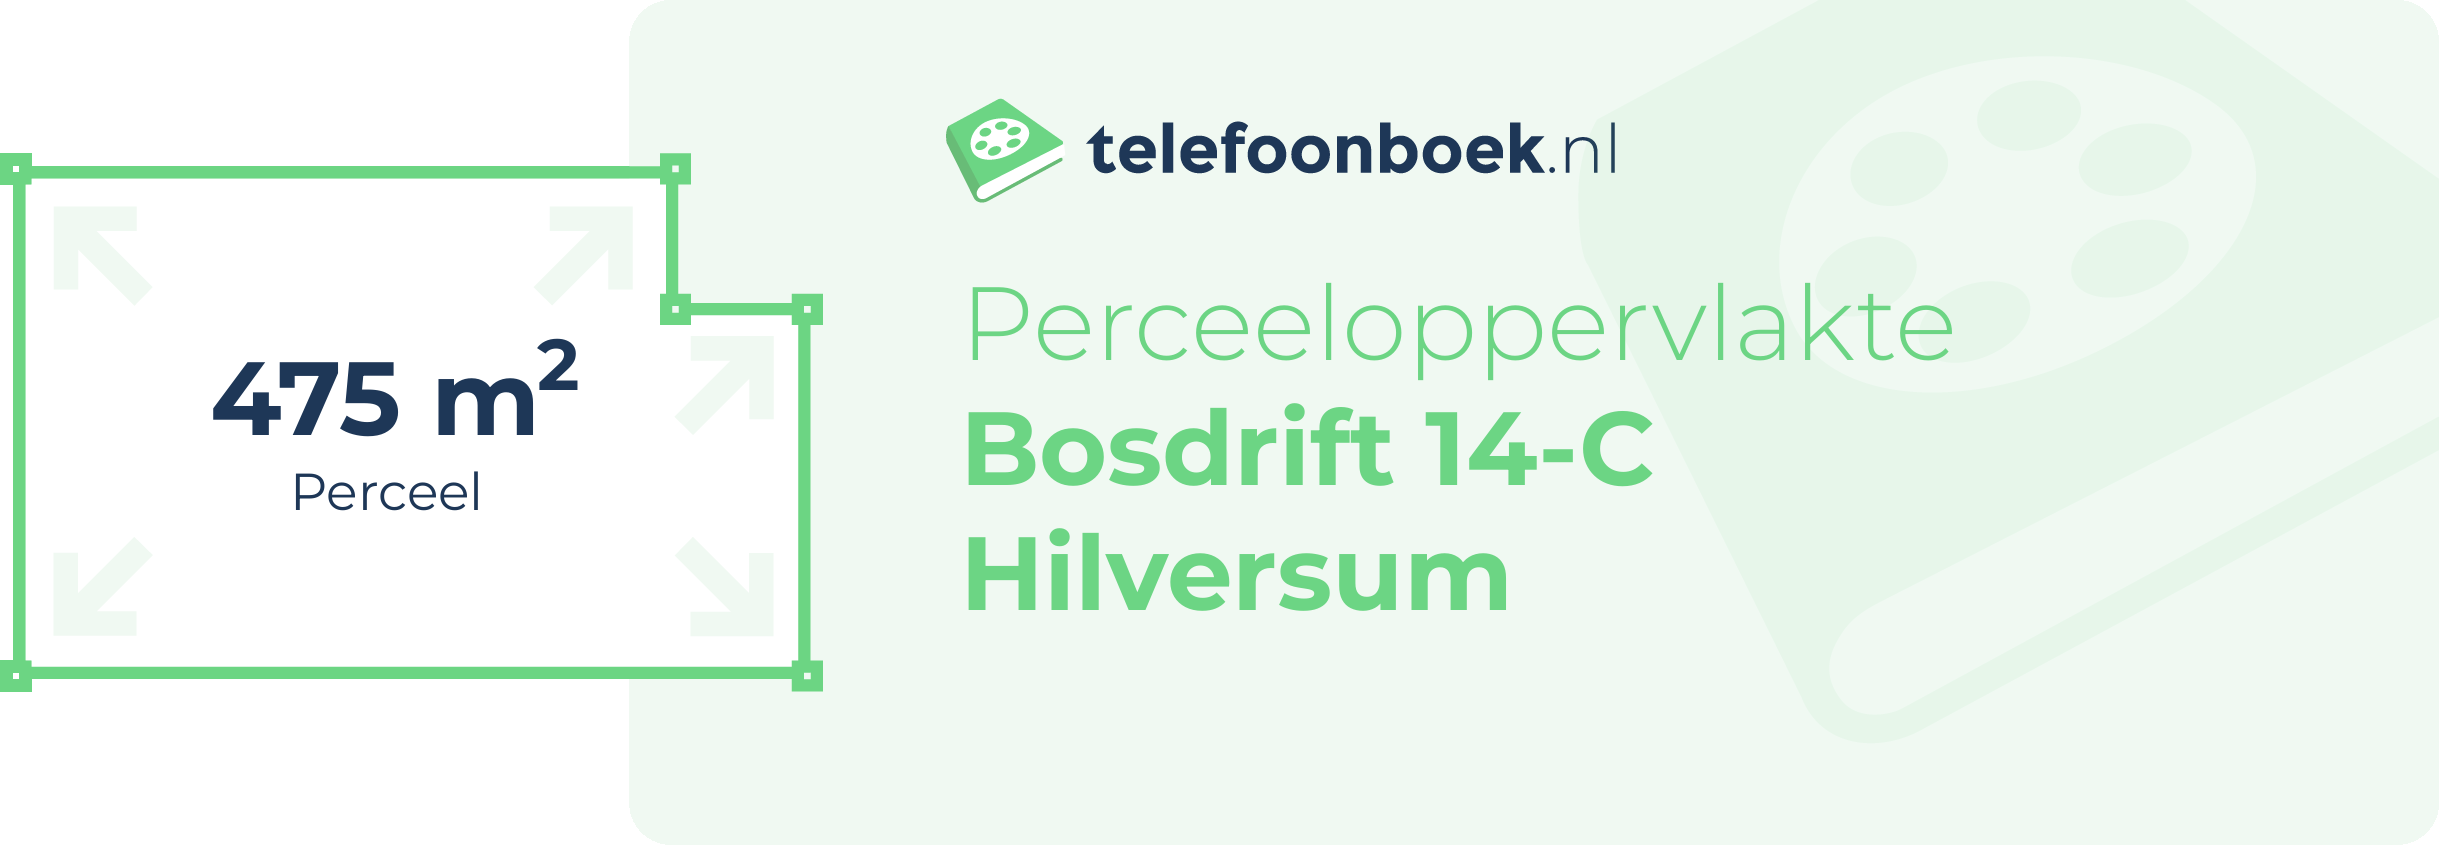 Perceeloppervlakte Bosdrift 14-C Hilversum